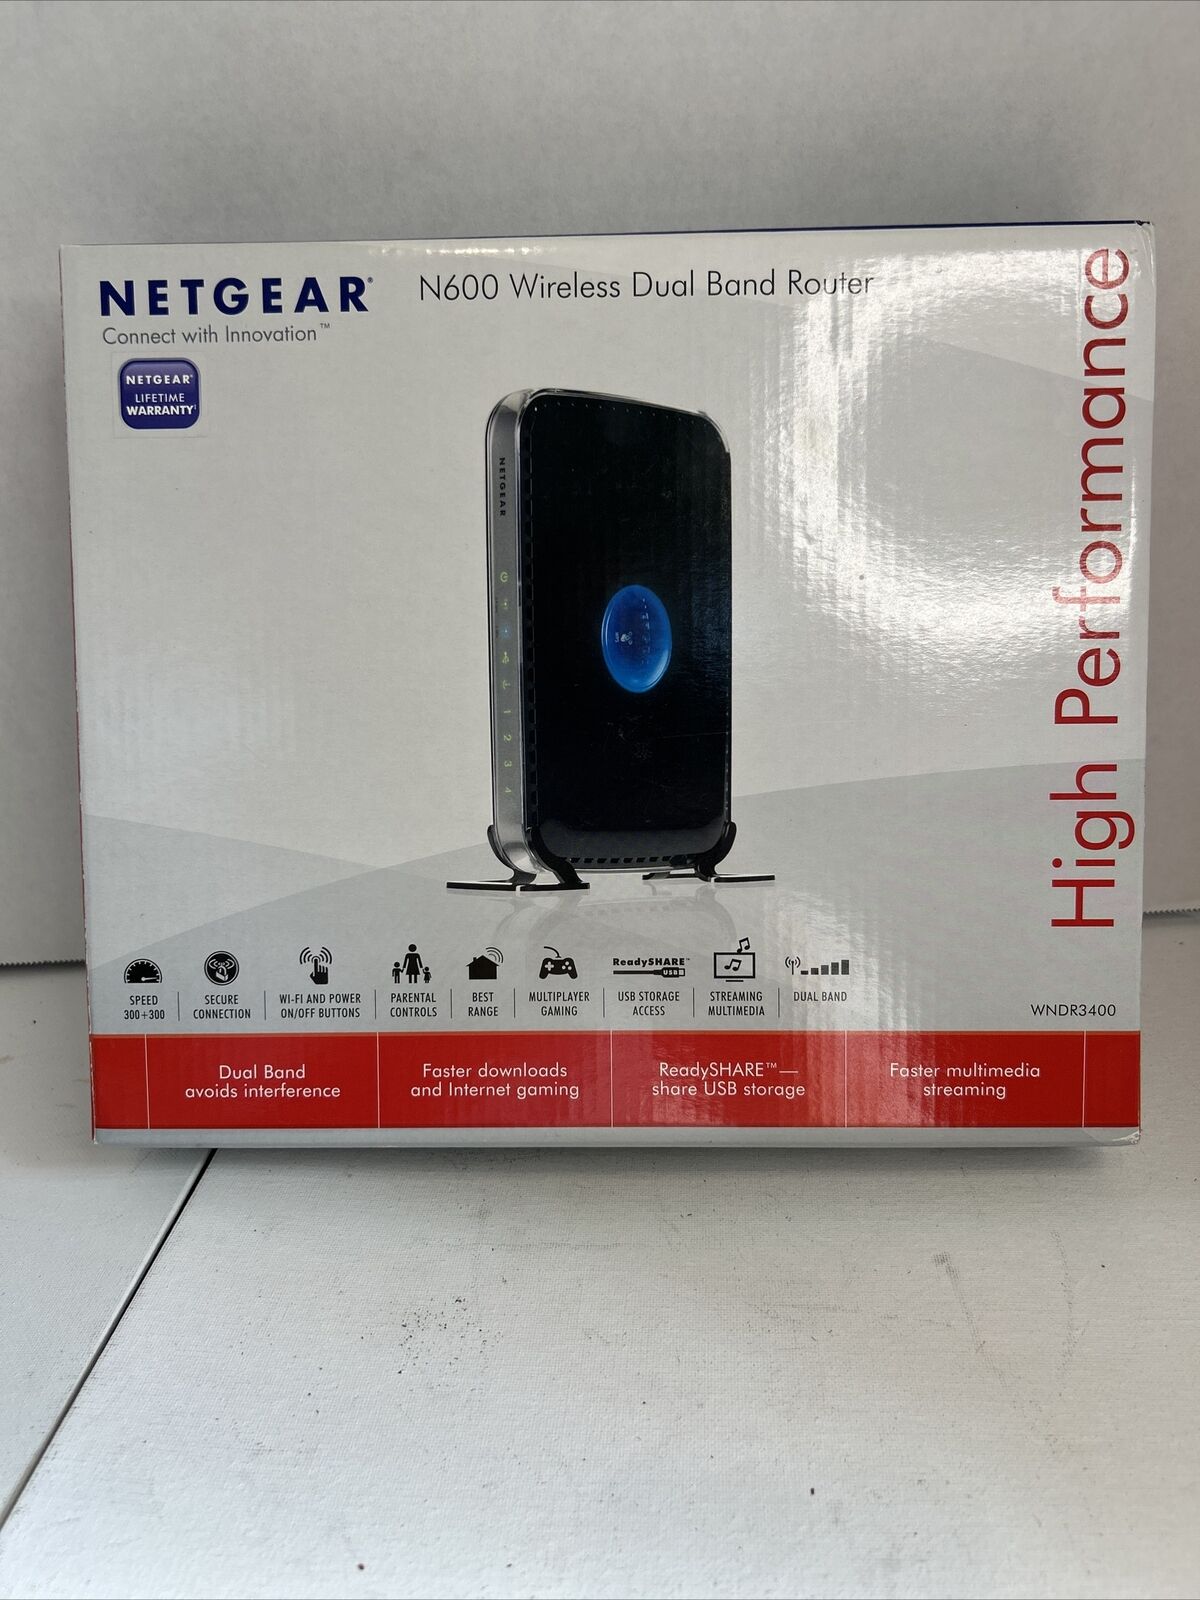 NEW OPEN BOX Netgear N600 Wireless Dual Band WiFi Router WNDR3400-100NAS - NIB